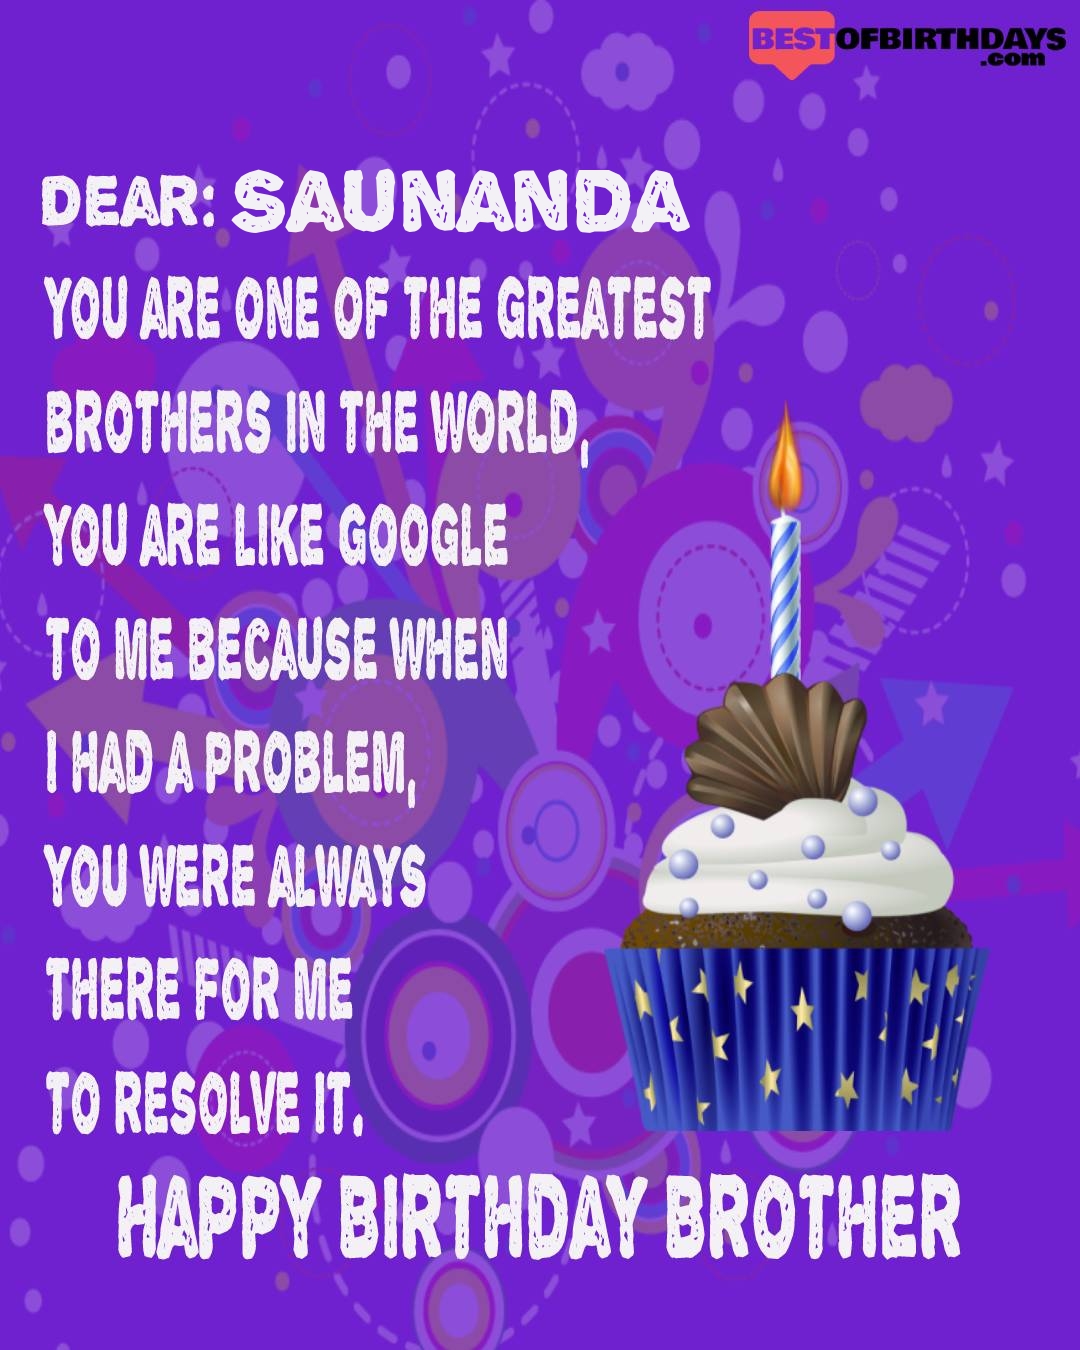 Happy birthday saunanda bhai brother bro